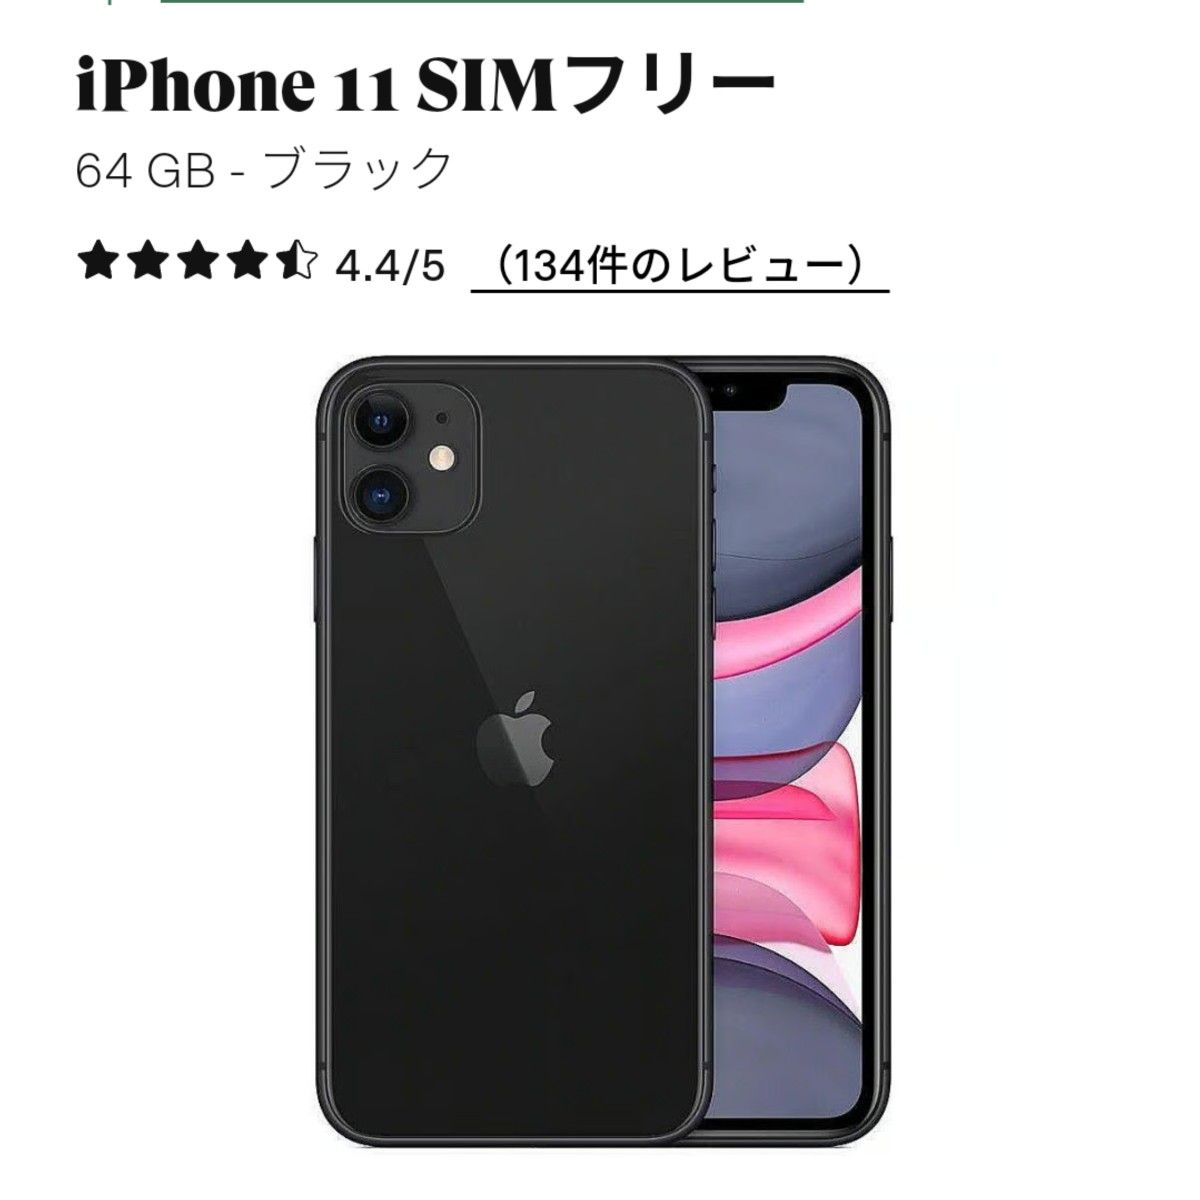 Apple iPhone11 64GB SiMフリー ブラック 動作良好 ケース付き｜PayPay